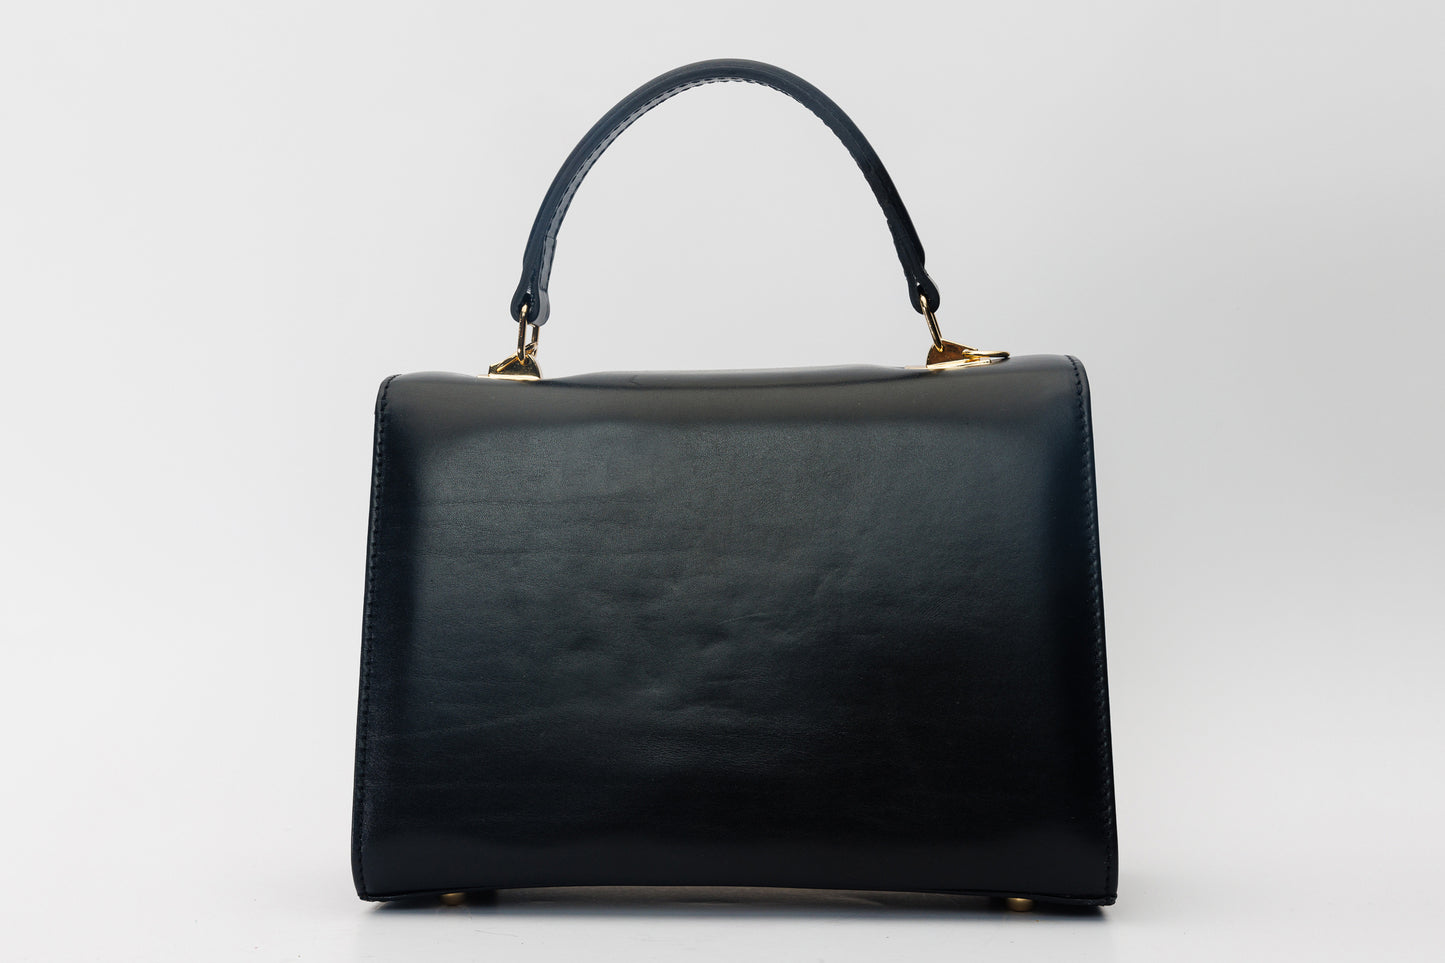 The Ege Black Leather Handbag